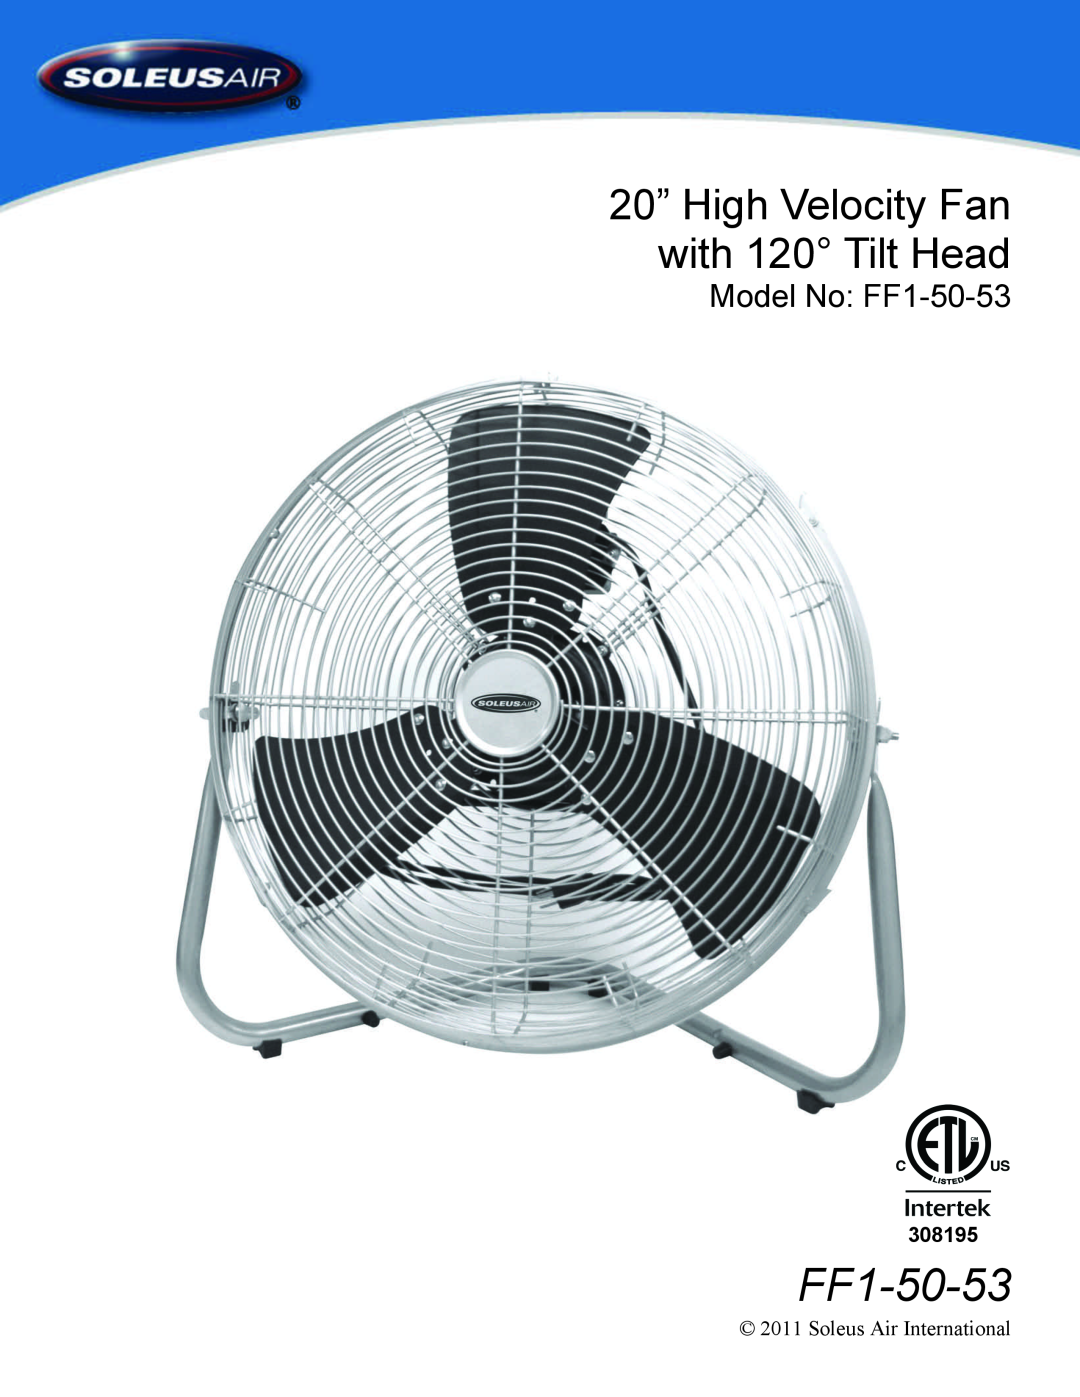 Soleus Air manual 20” High Velocity Fan with 120 Tilt Head, Model No FF1-50-53, 308195 